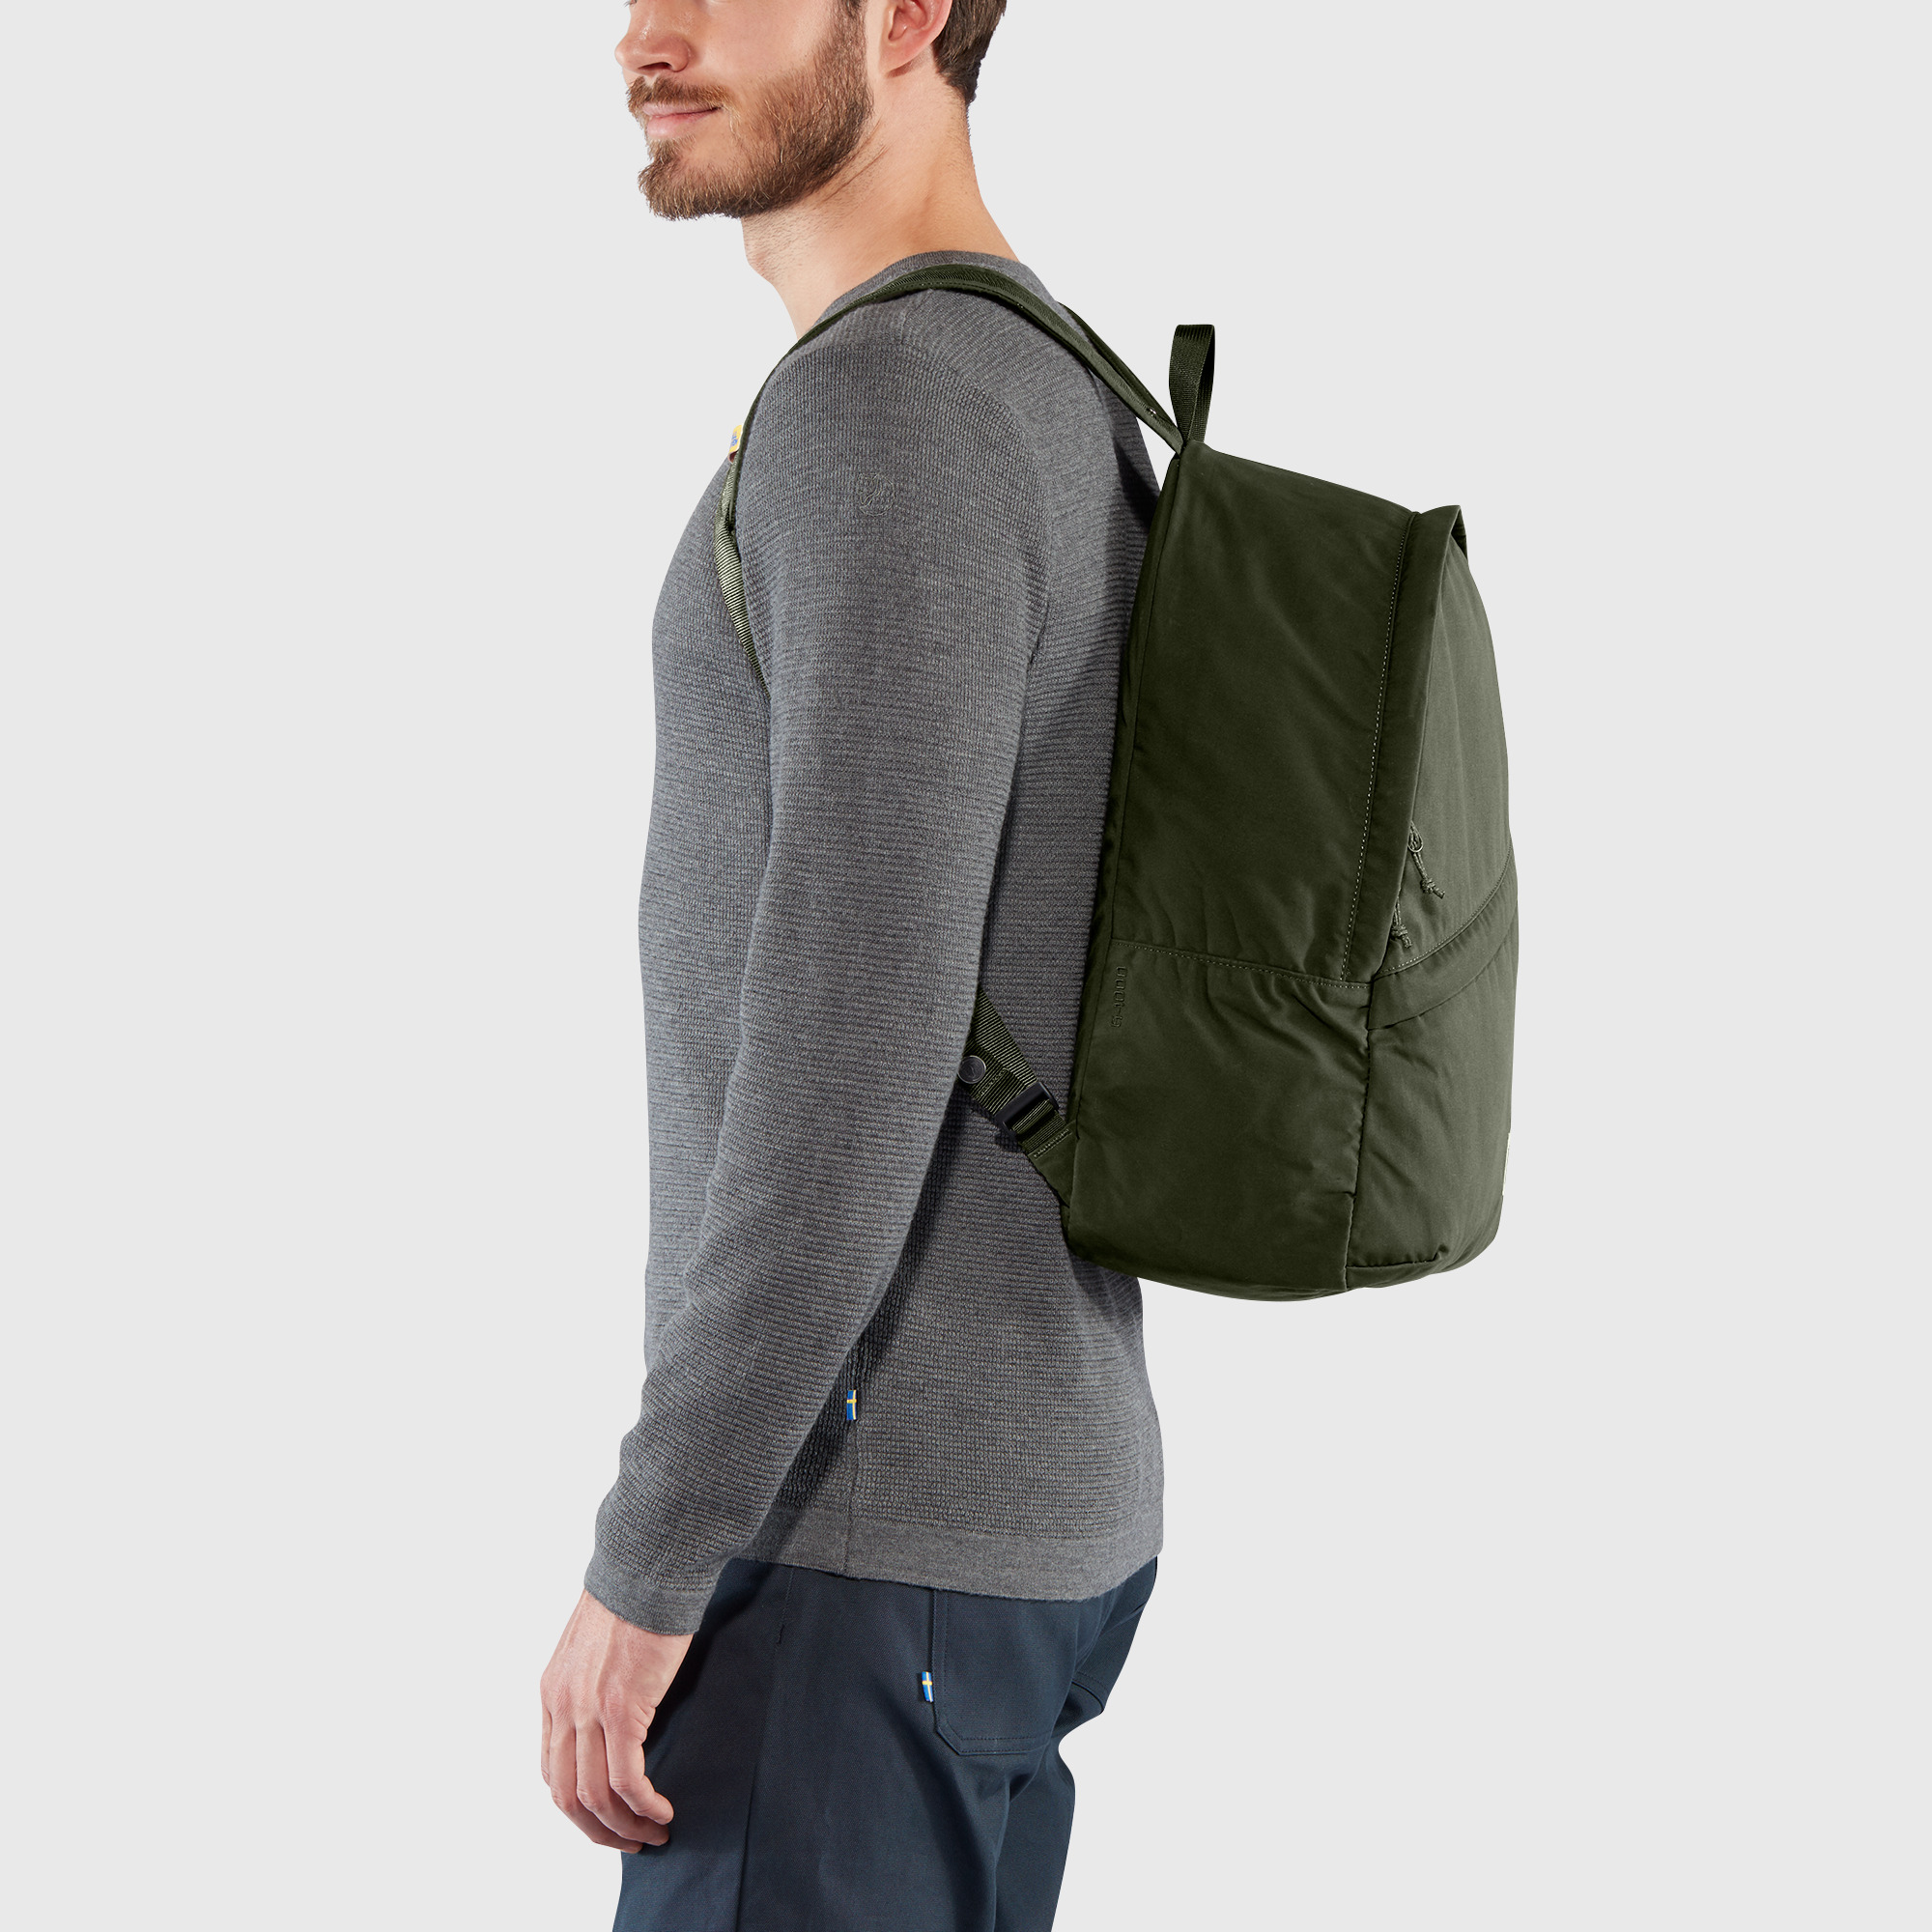 Fjällräven Vardag 25 Tagesrucksack grün Rucksack Tasche Backpack Outdoor Daypack 